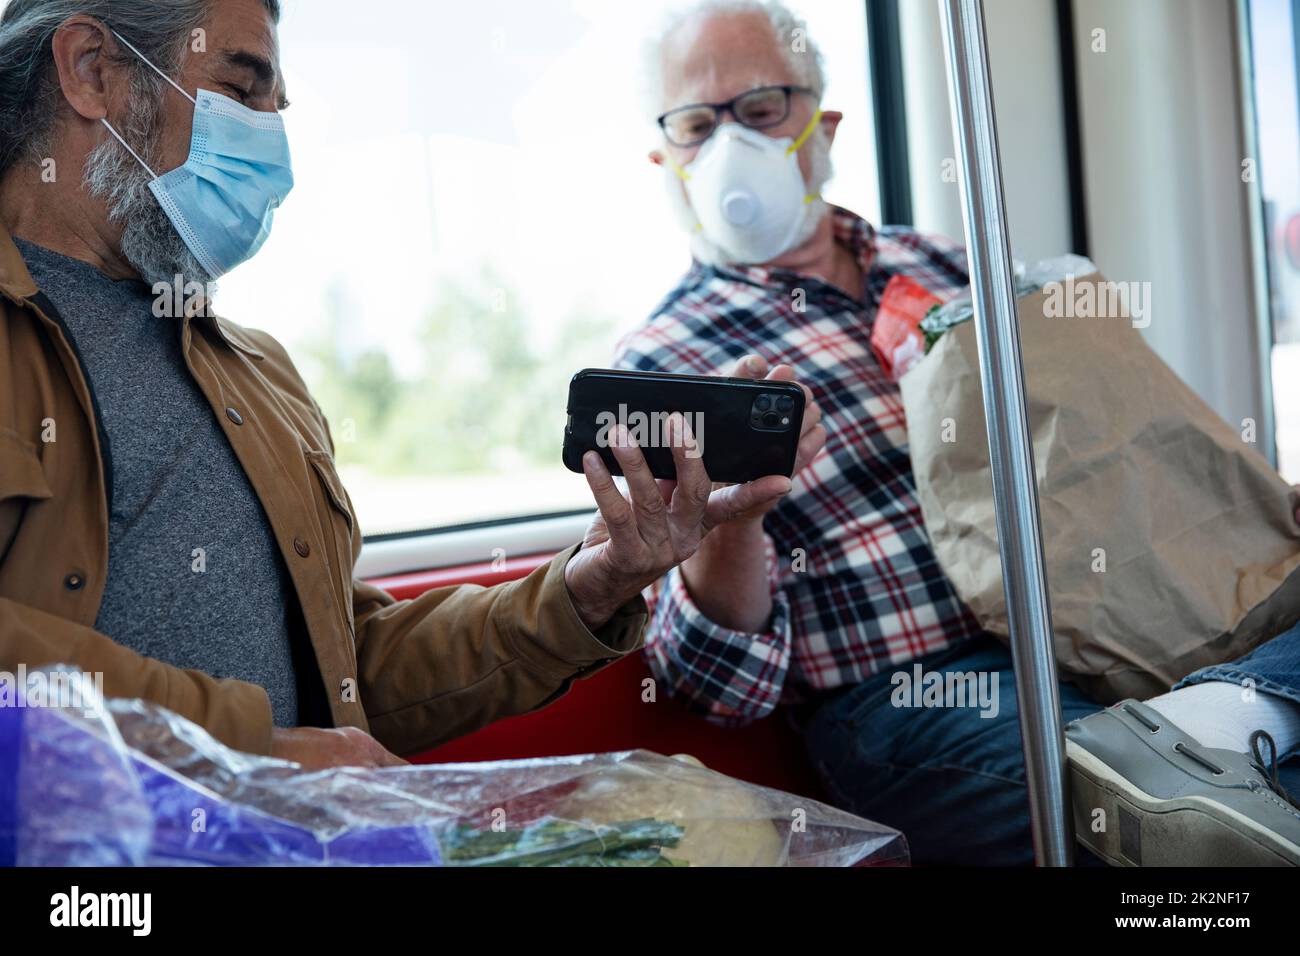 Senior male passengers in face masks using smart phone on subway Stock Photo